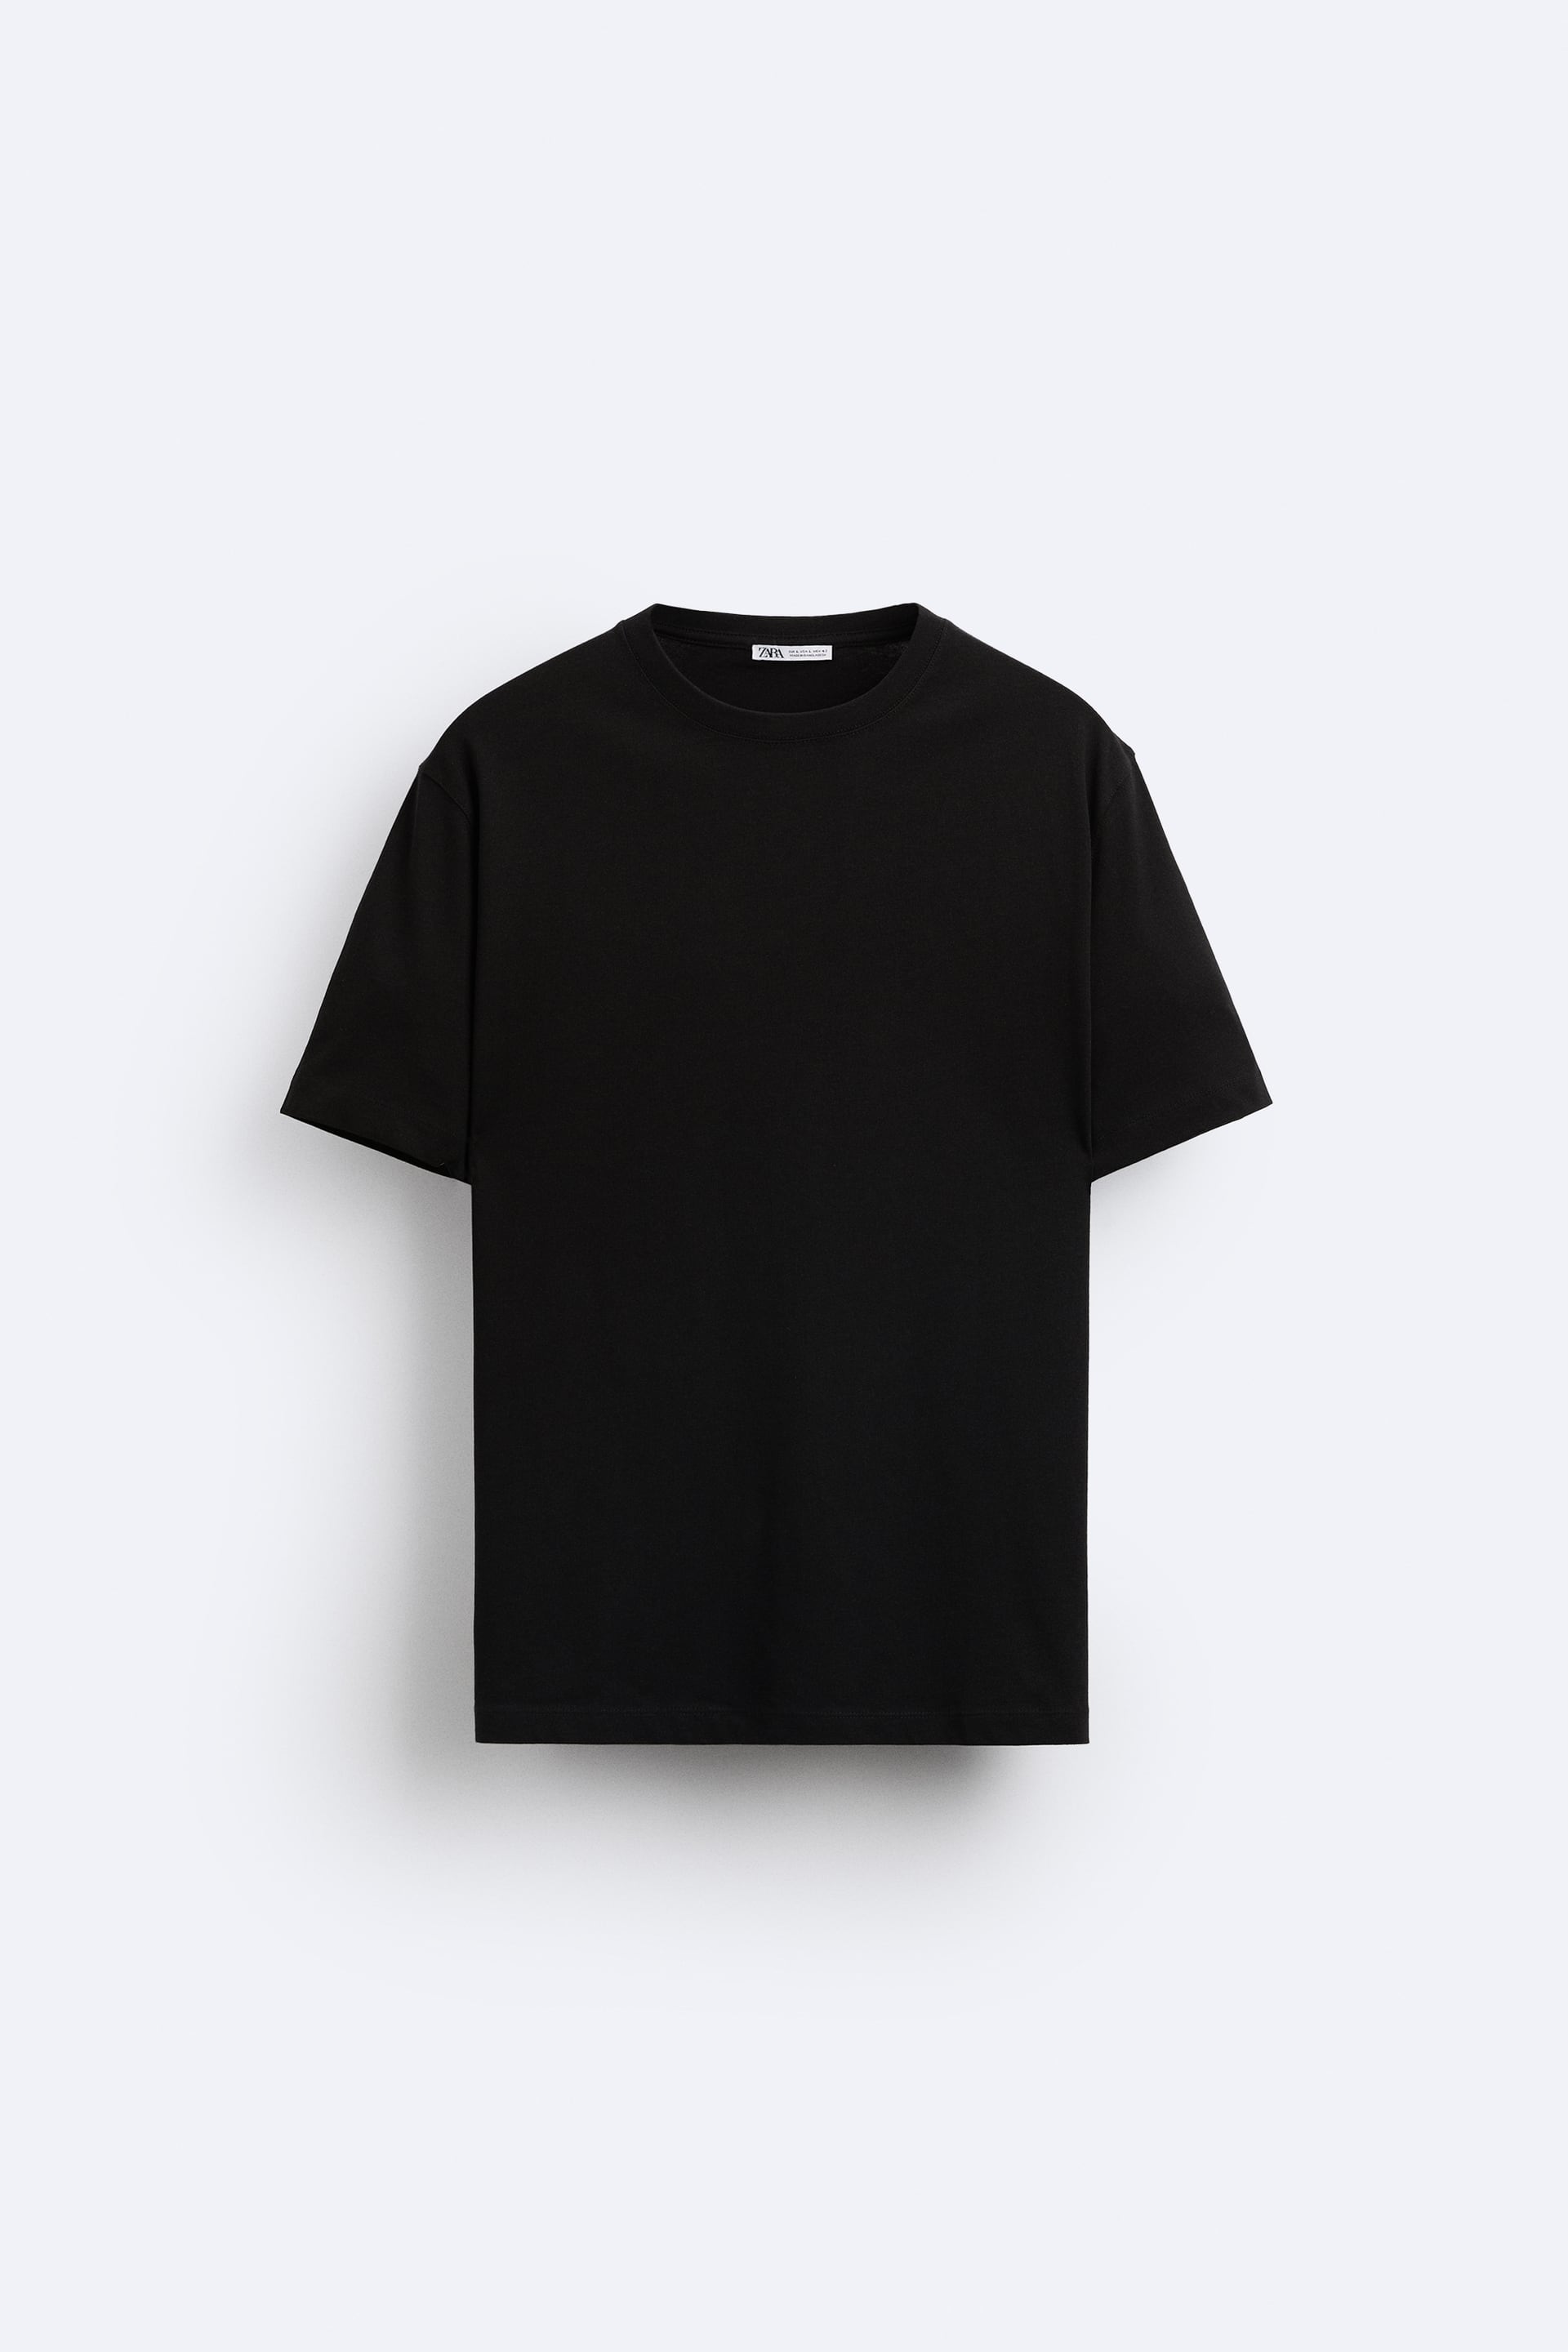 Zara - Basic Medium Weight T-Shirt - Black - Men